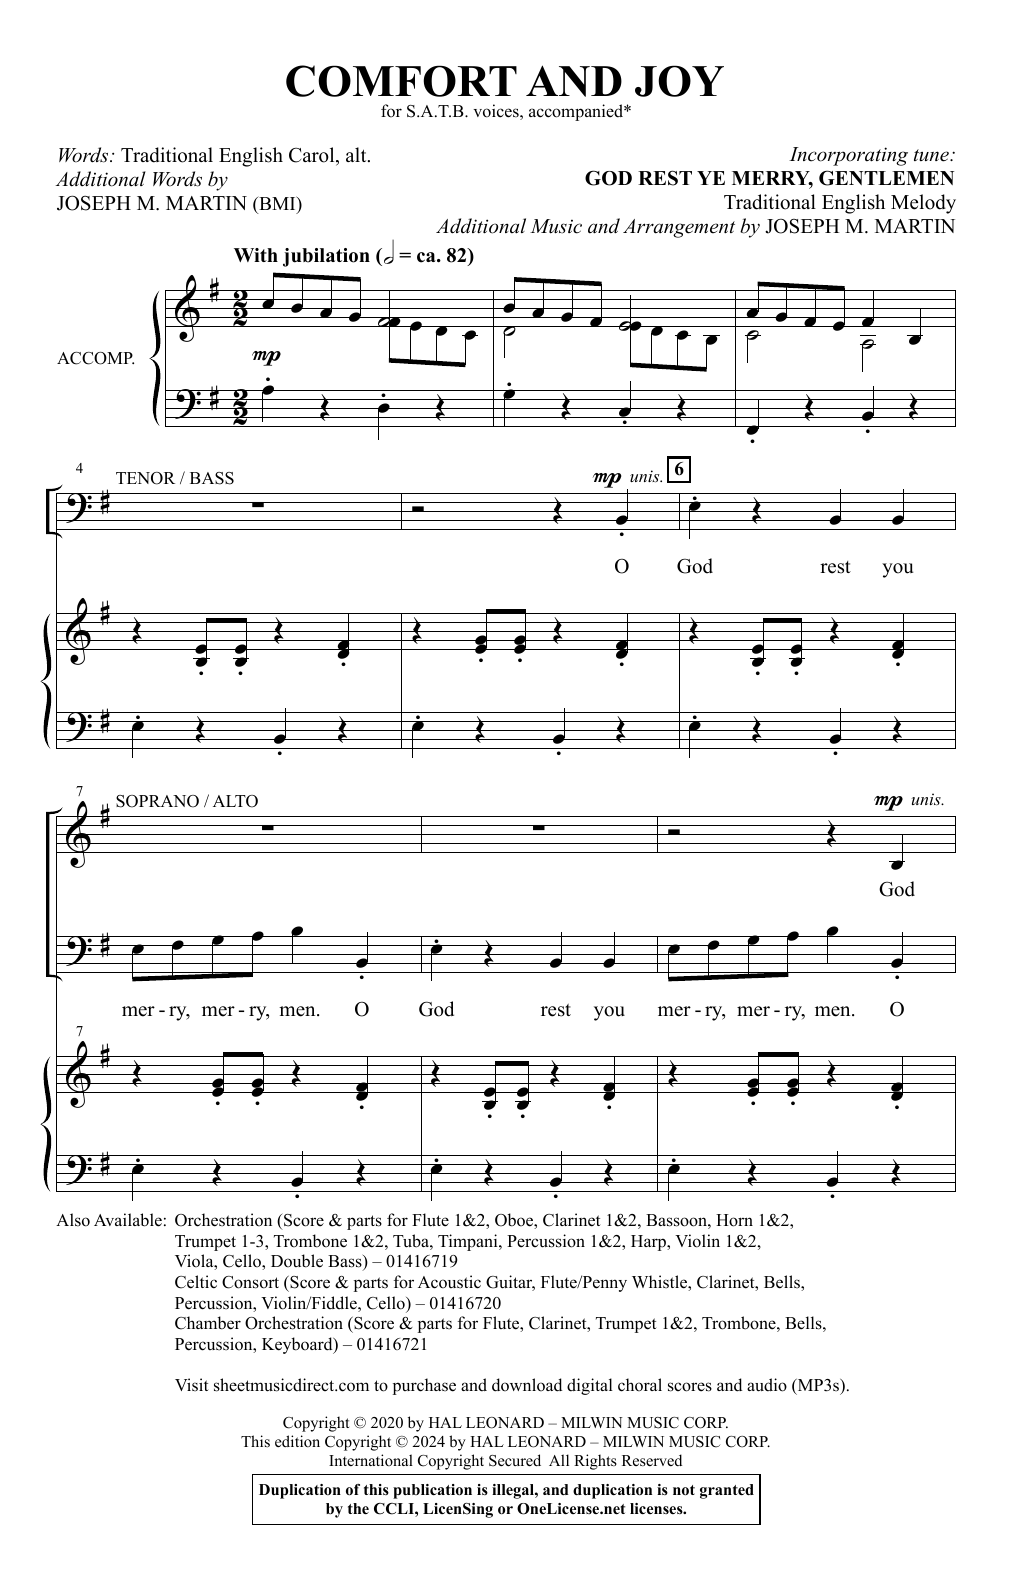 Joseph M. Martin Comfort And Joy Sheet Music Notes & Chords for SATB Choir - Download or Print PDF